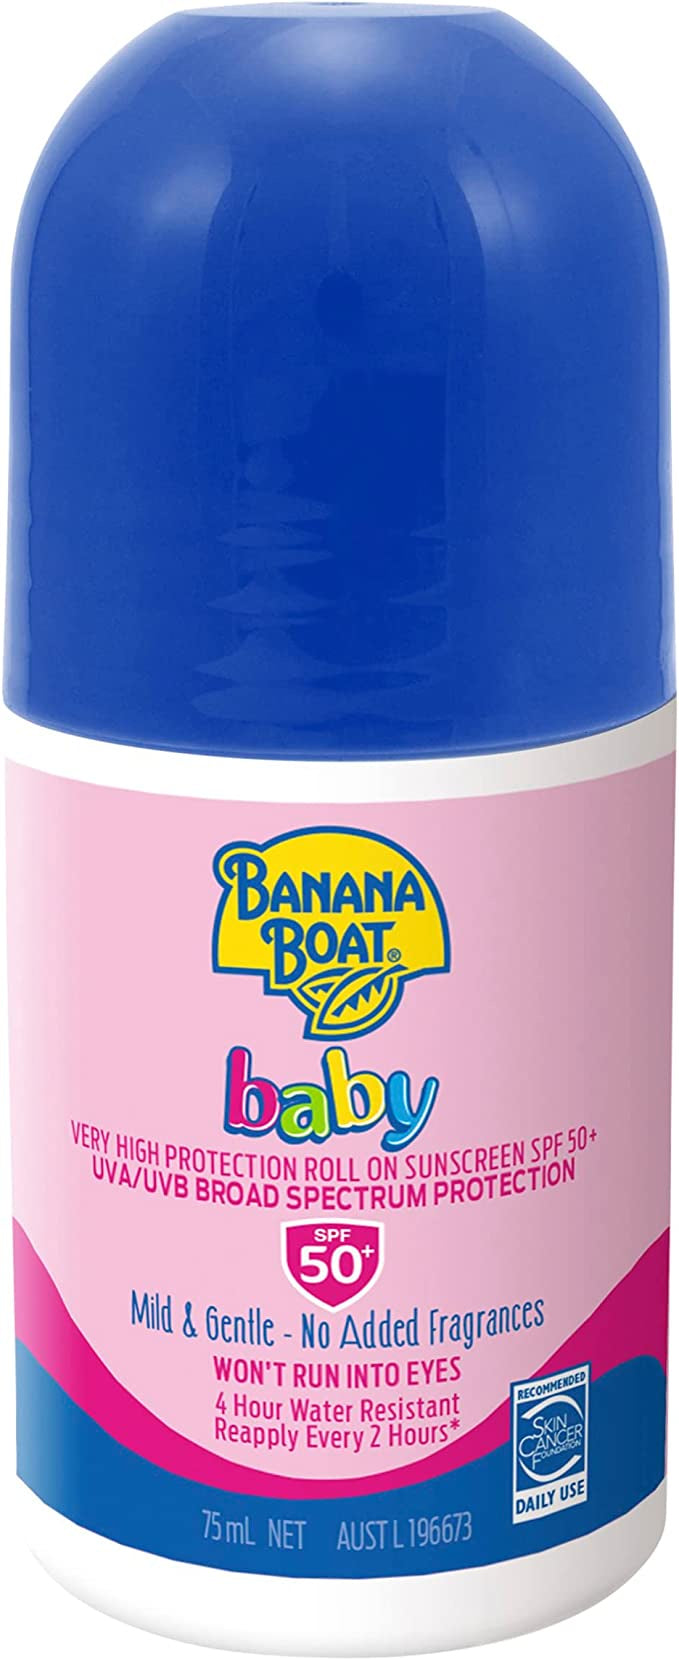 Banana Boat Baby Sunscreen Roll On SPF50 75mL